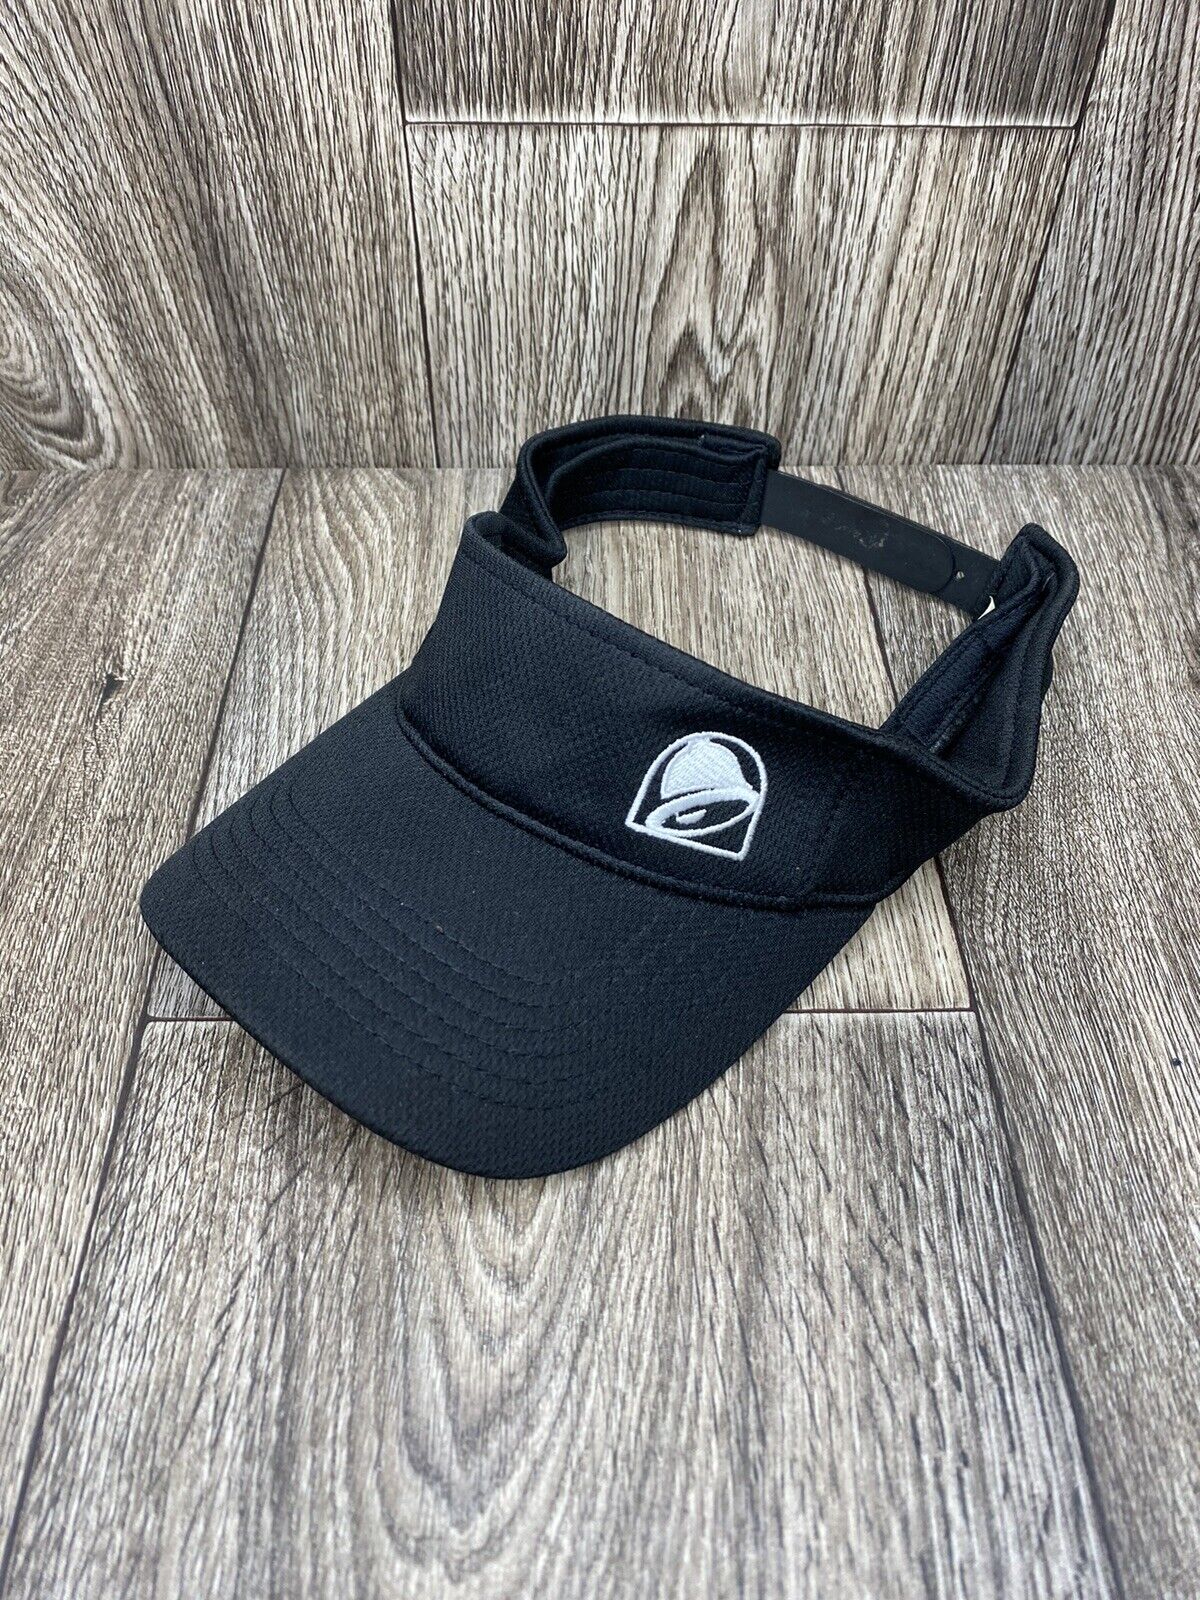 Authentic Taco Bell Employee Visor Hat Snapback Logo